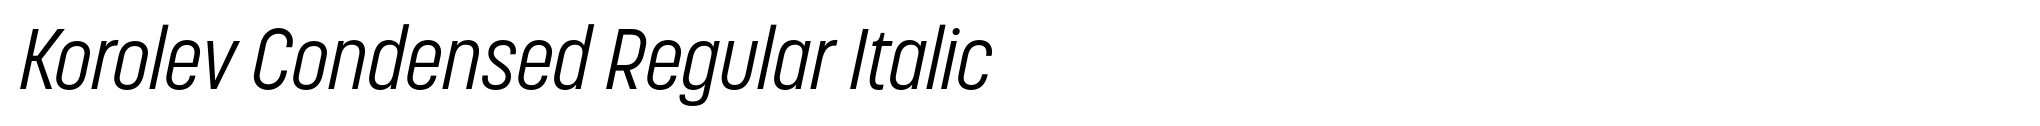 Korolev Condensed Regular Italic image